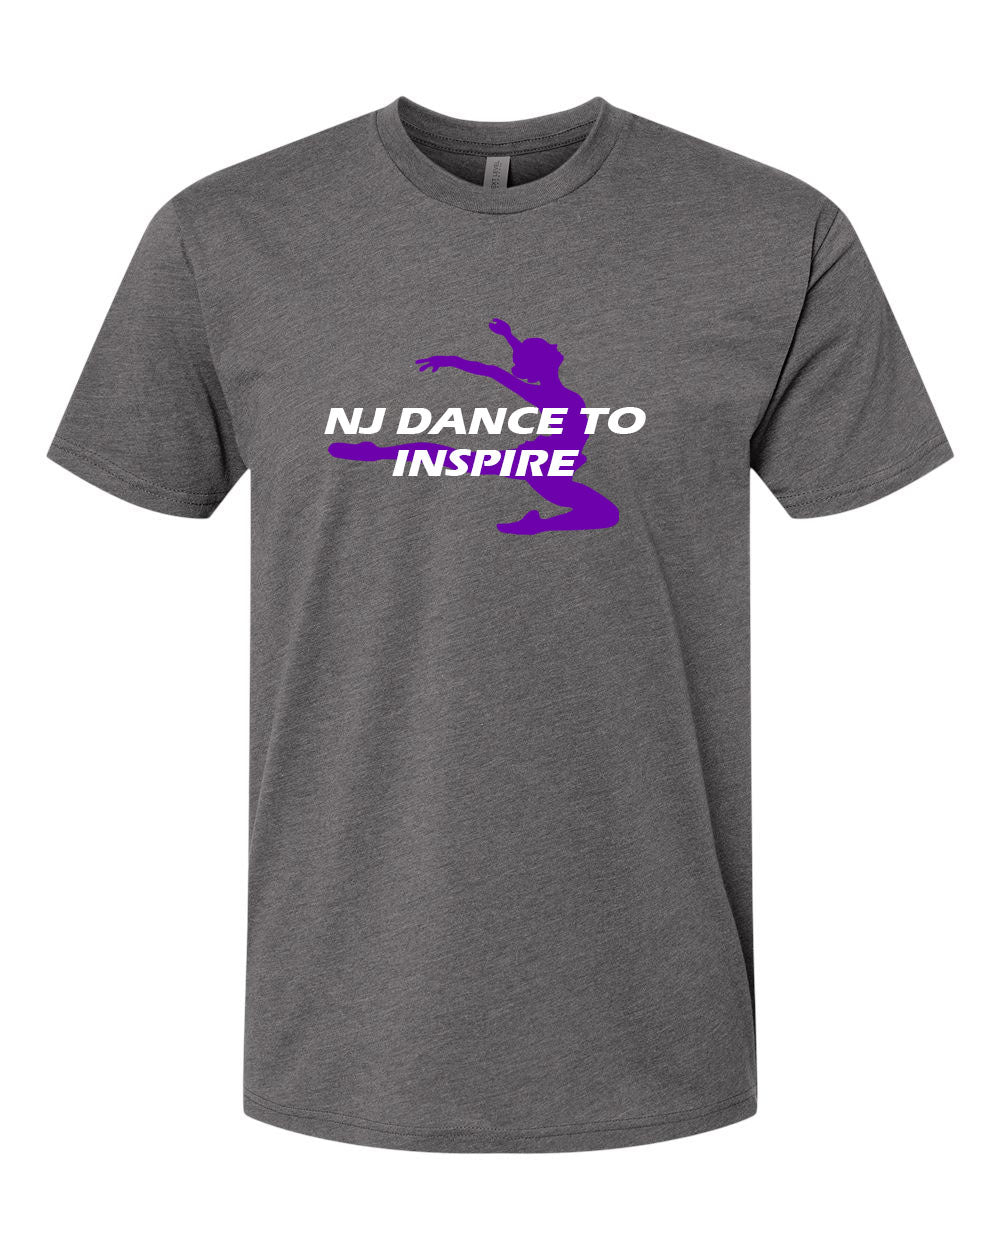 NJ Dance design 1 T-Shirt